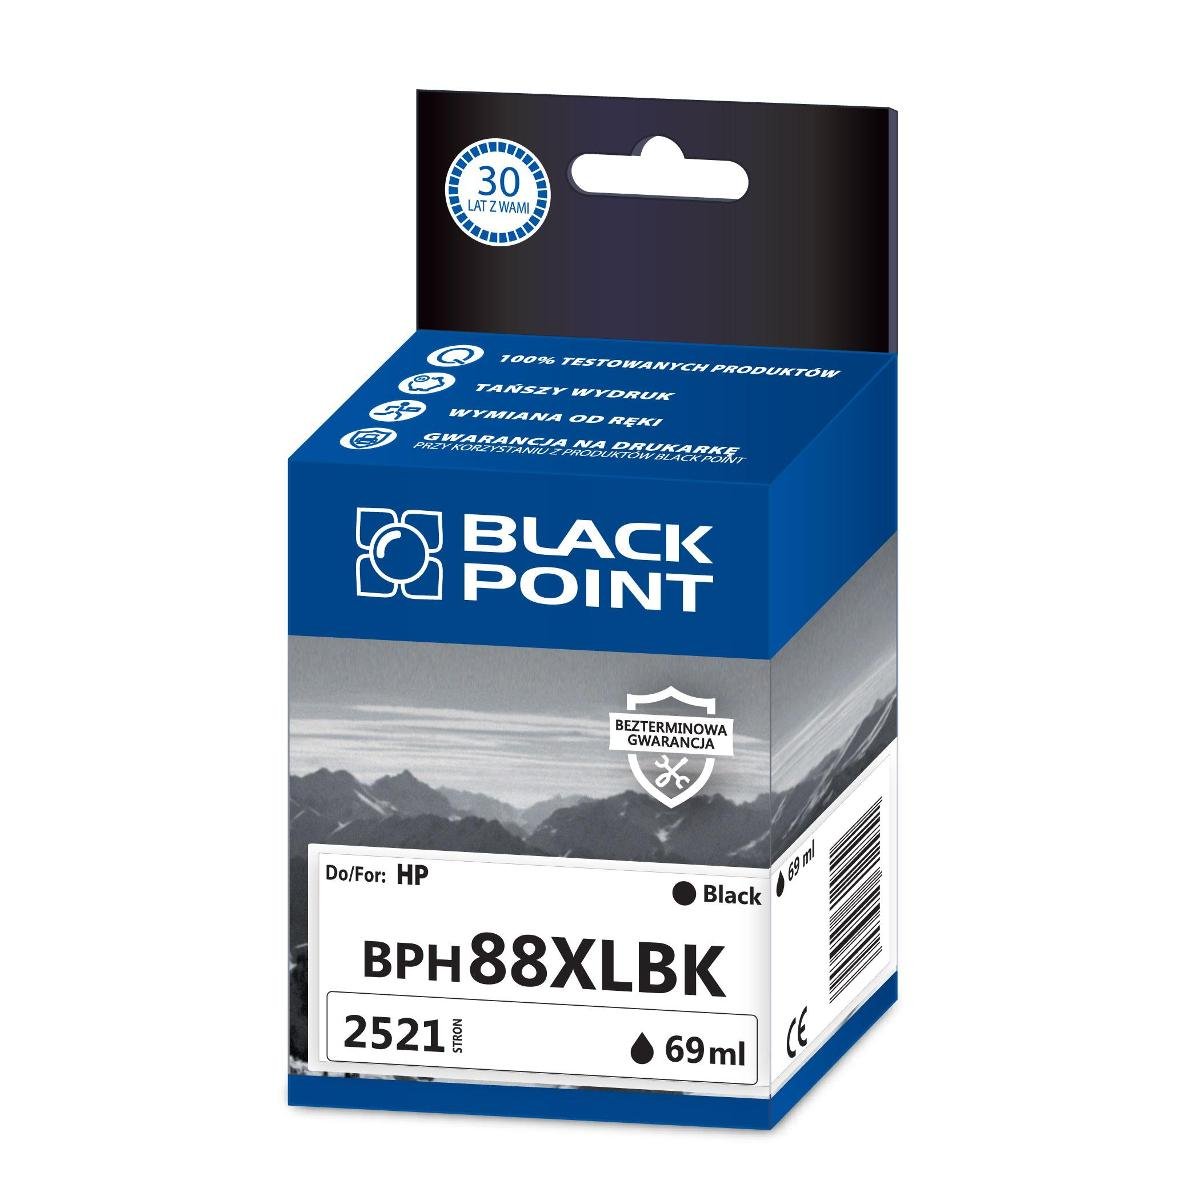 Black Point BPH88XLBK zamiennik HP C9396AE